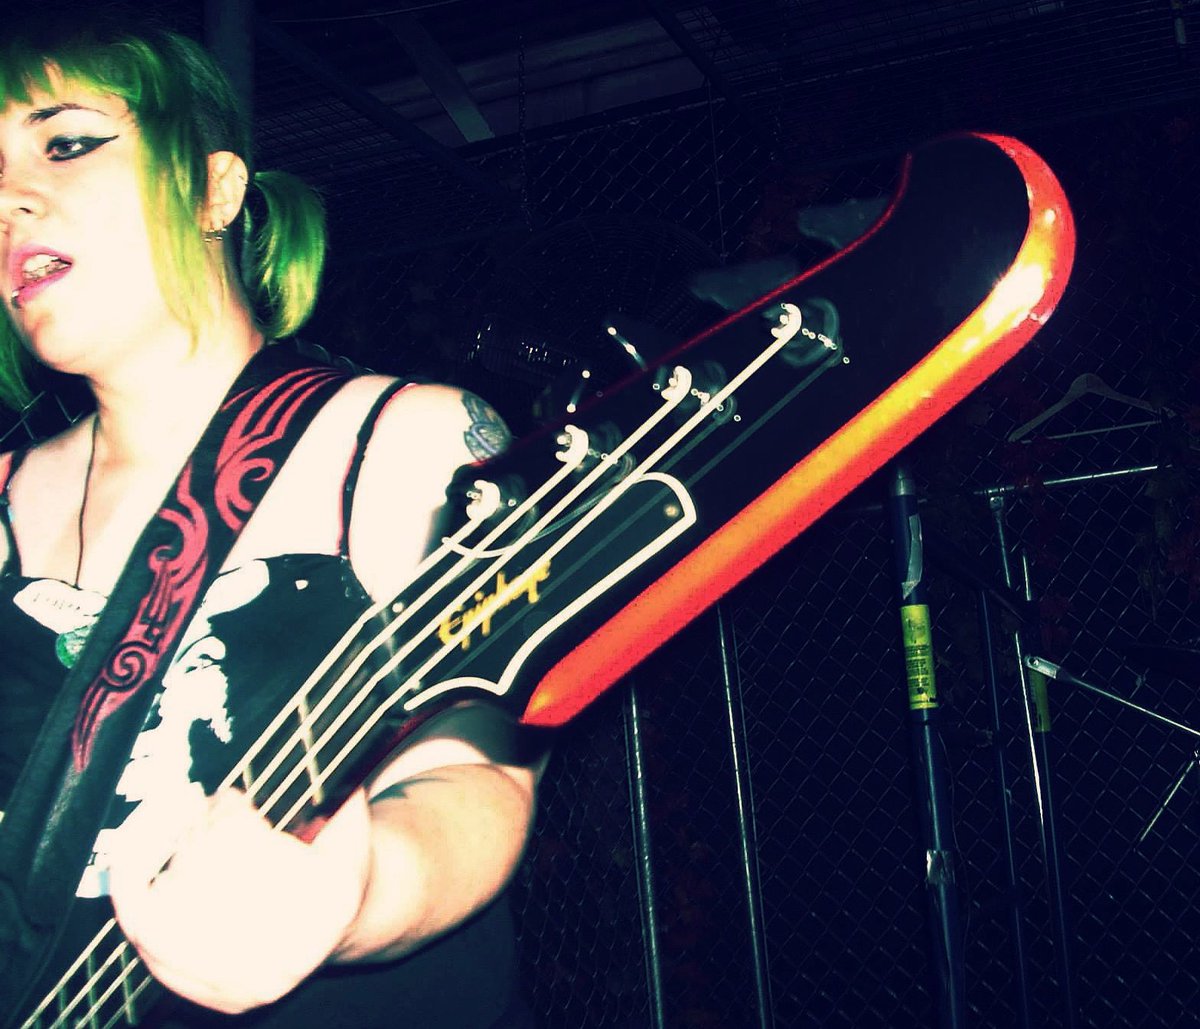 It’s not easy being green 💚

#bassist #punkrock #thunderbirdbass #musician #kaylecrone